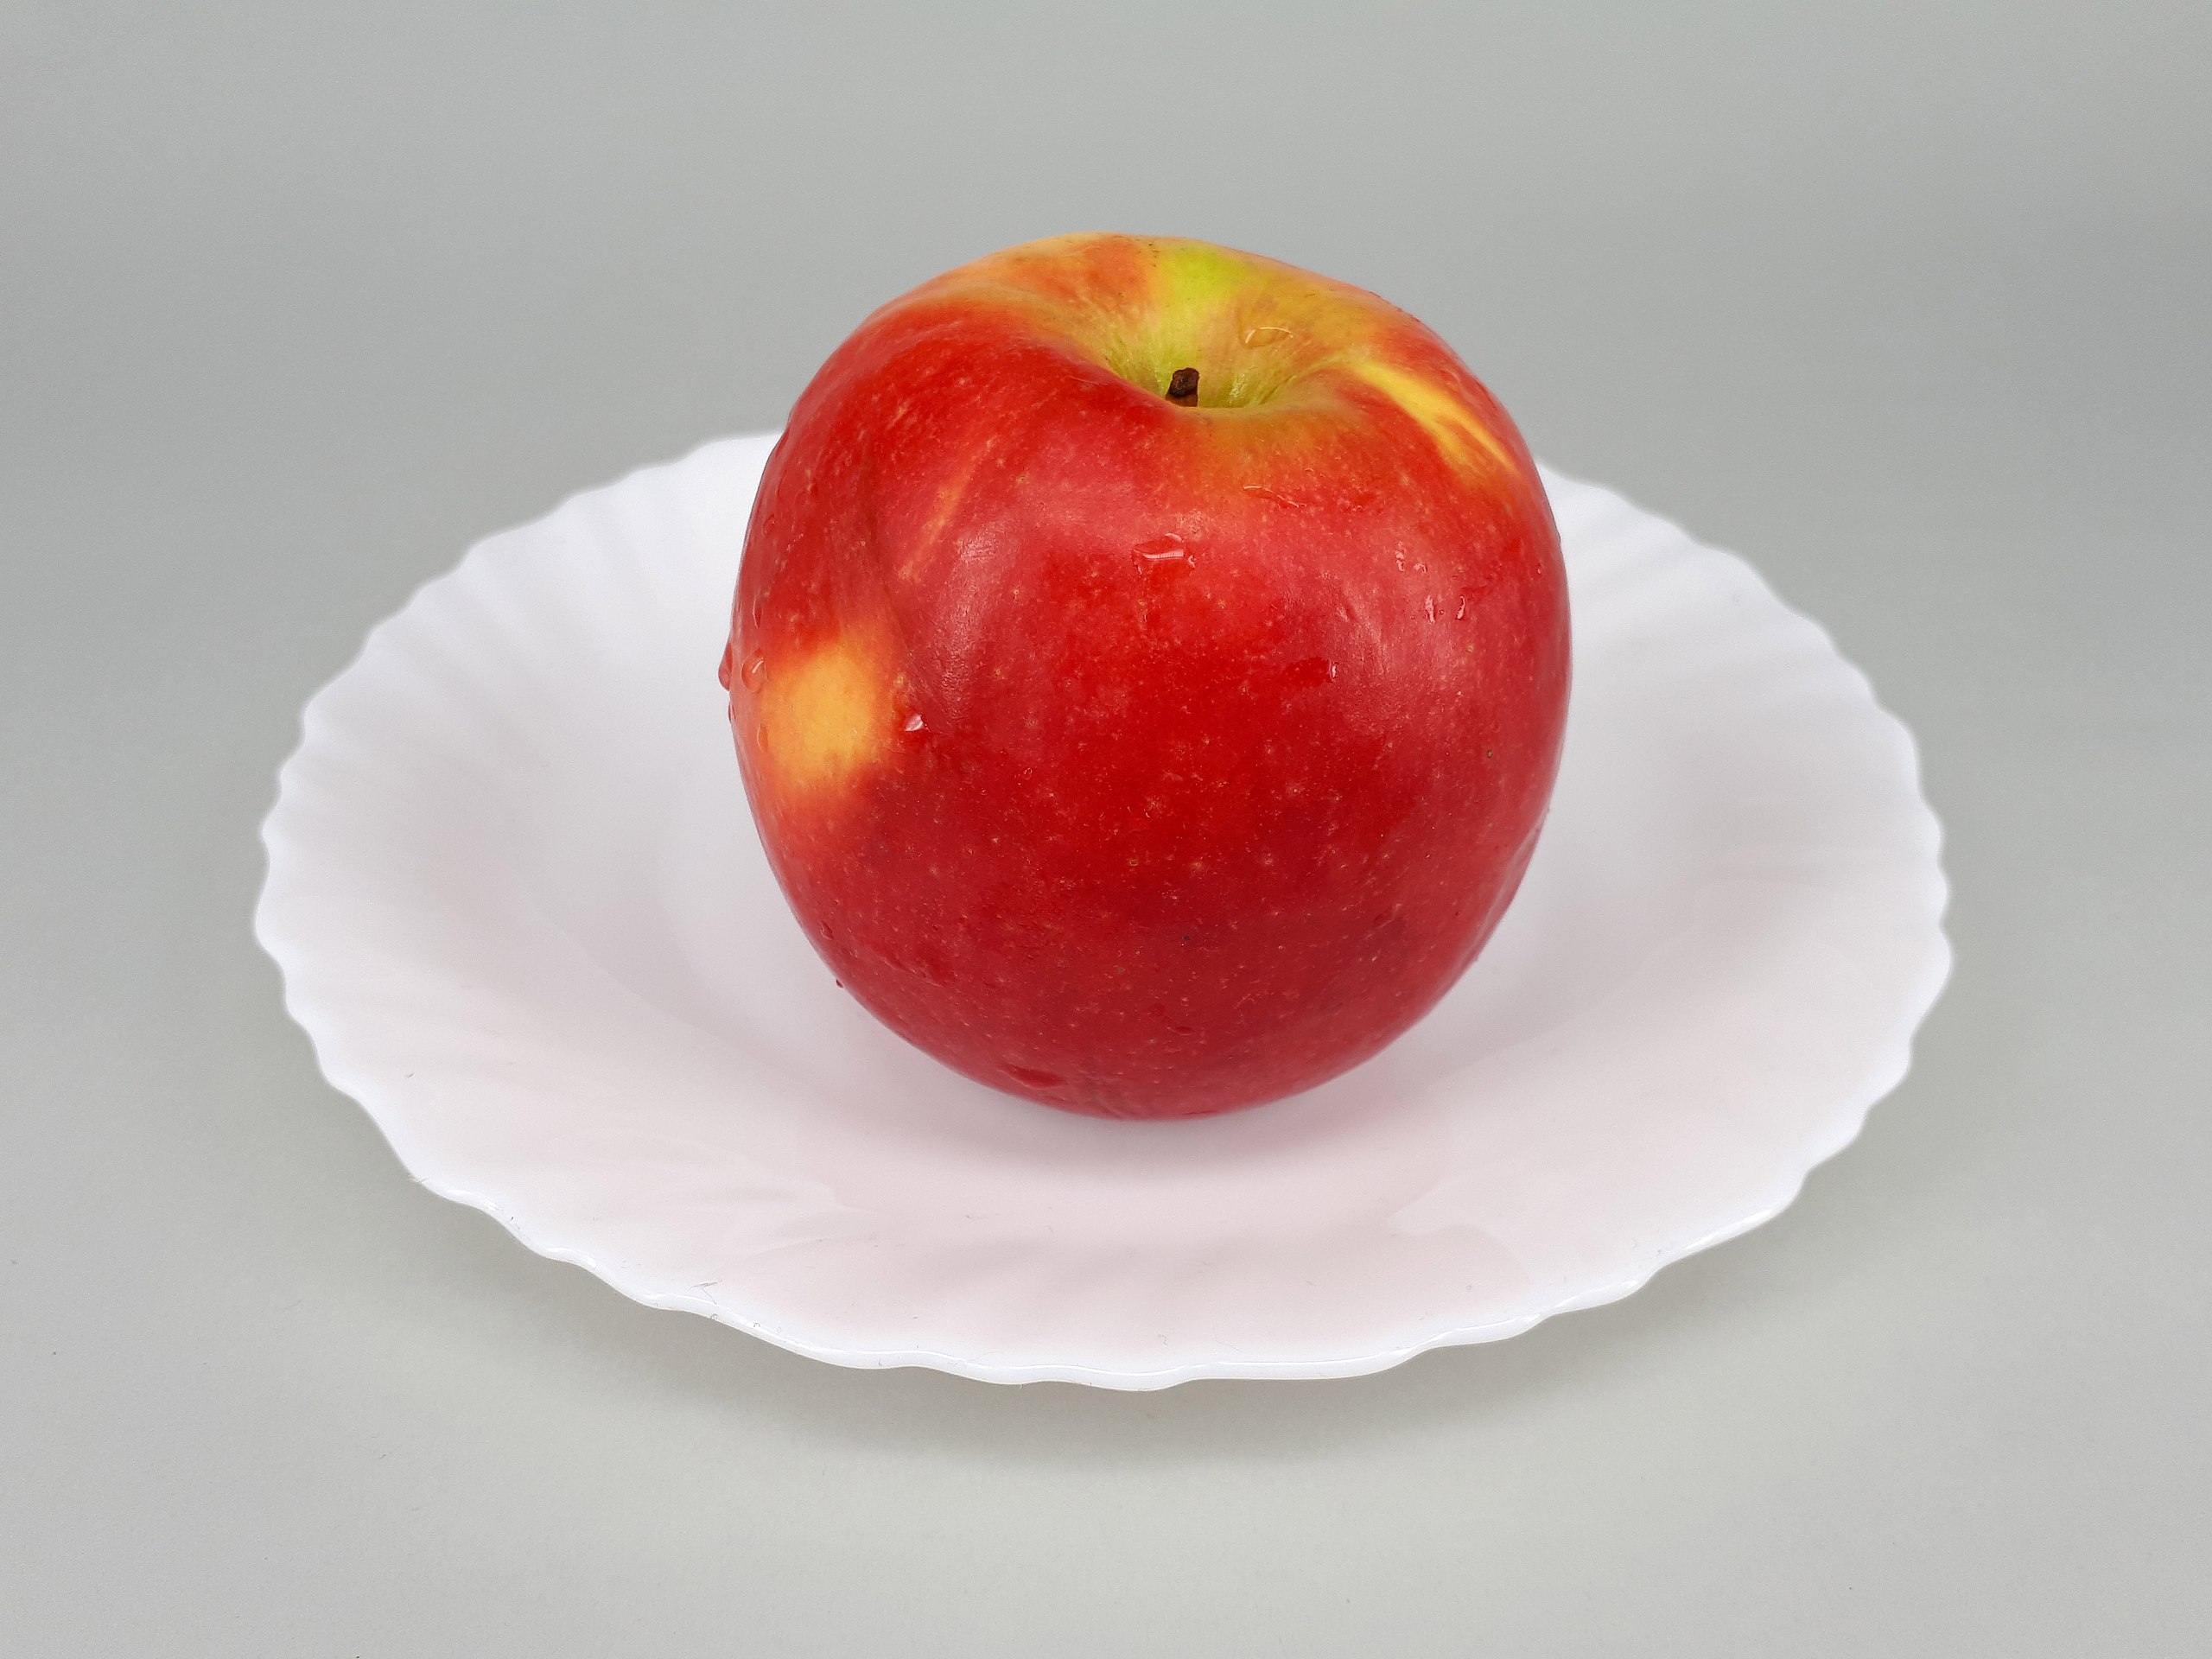 File:Red Apple.jpg - Wikipedia